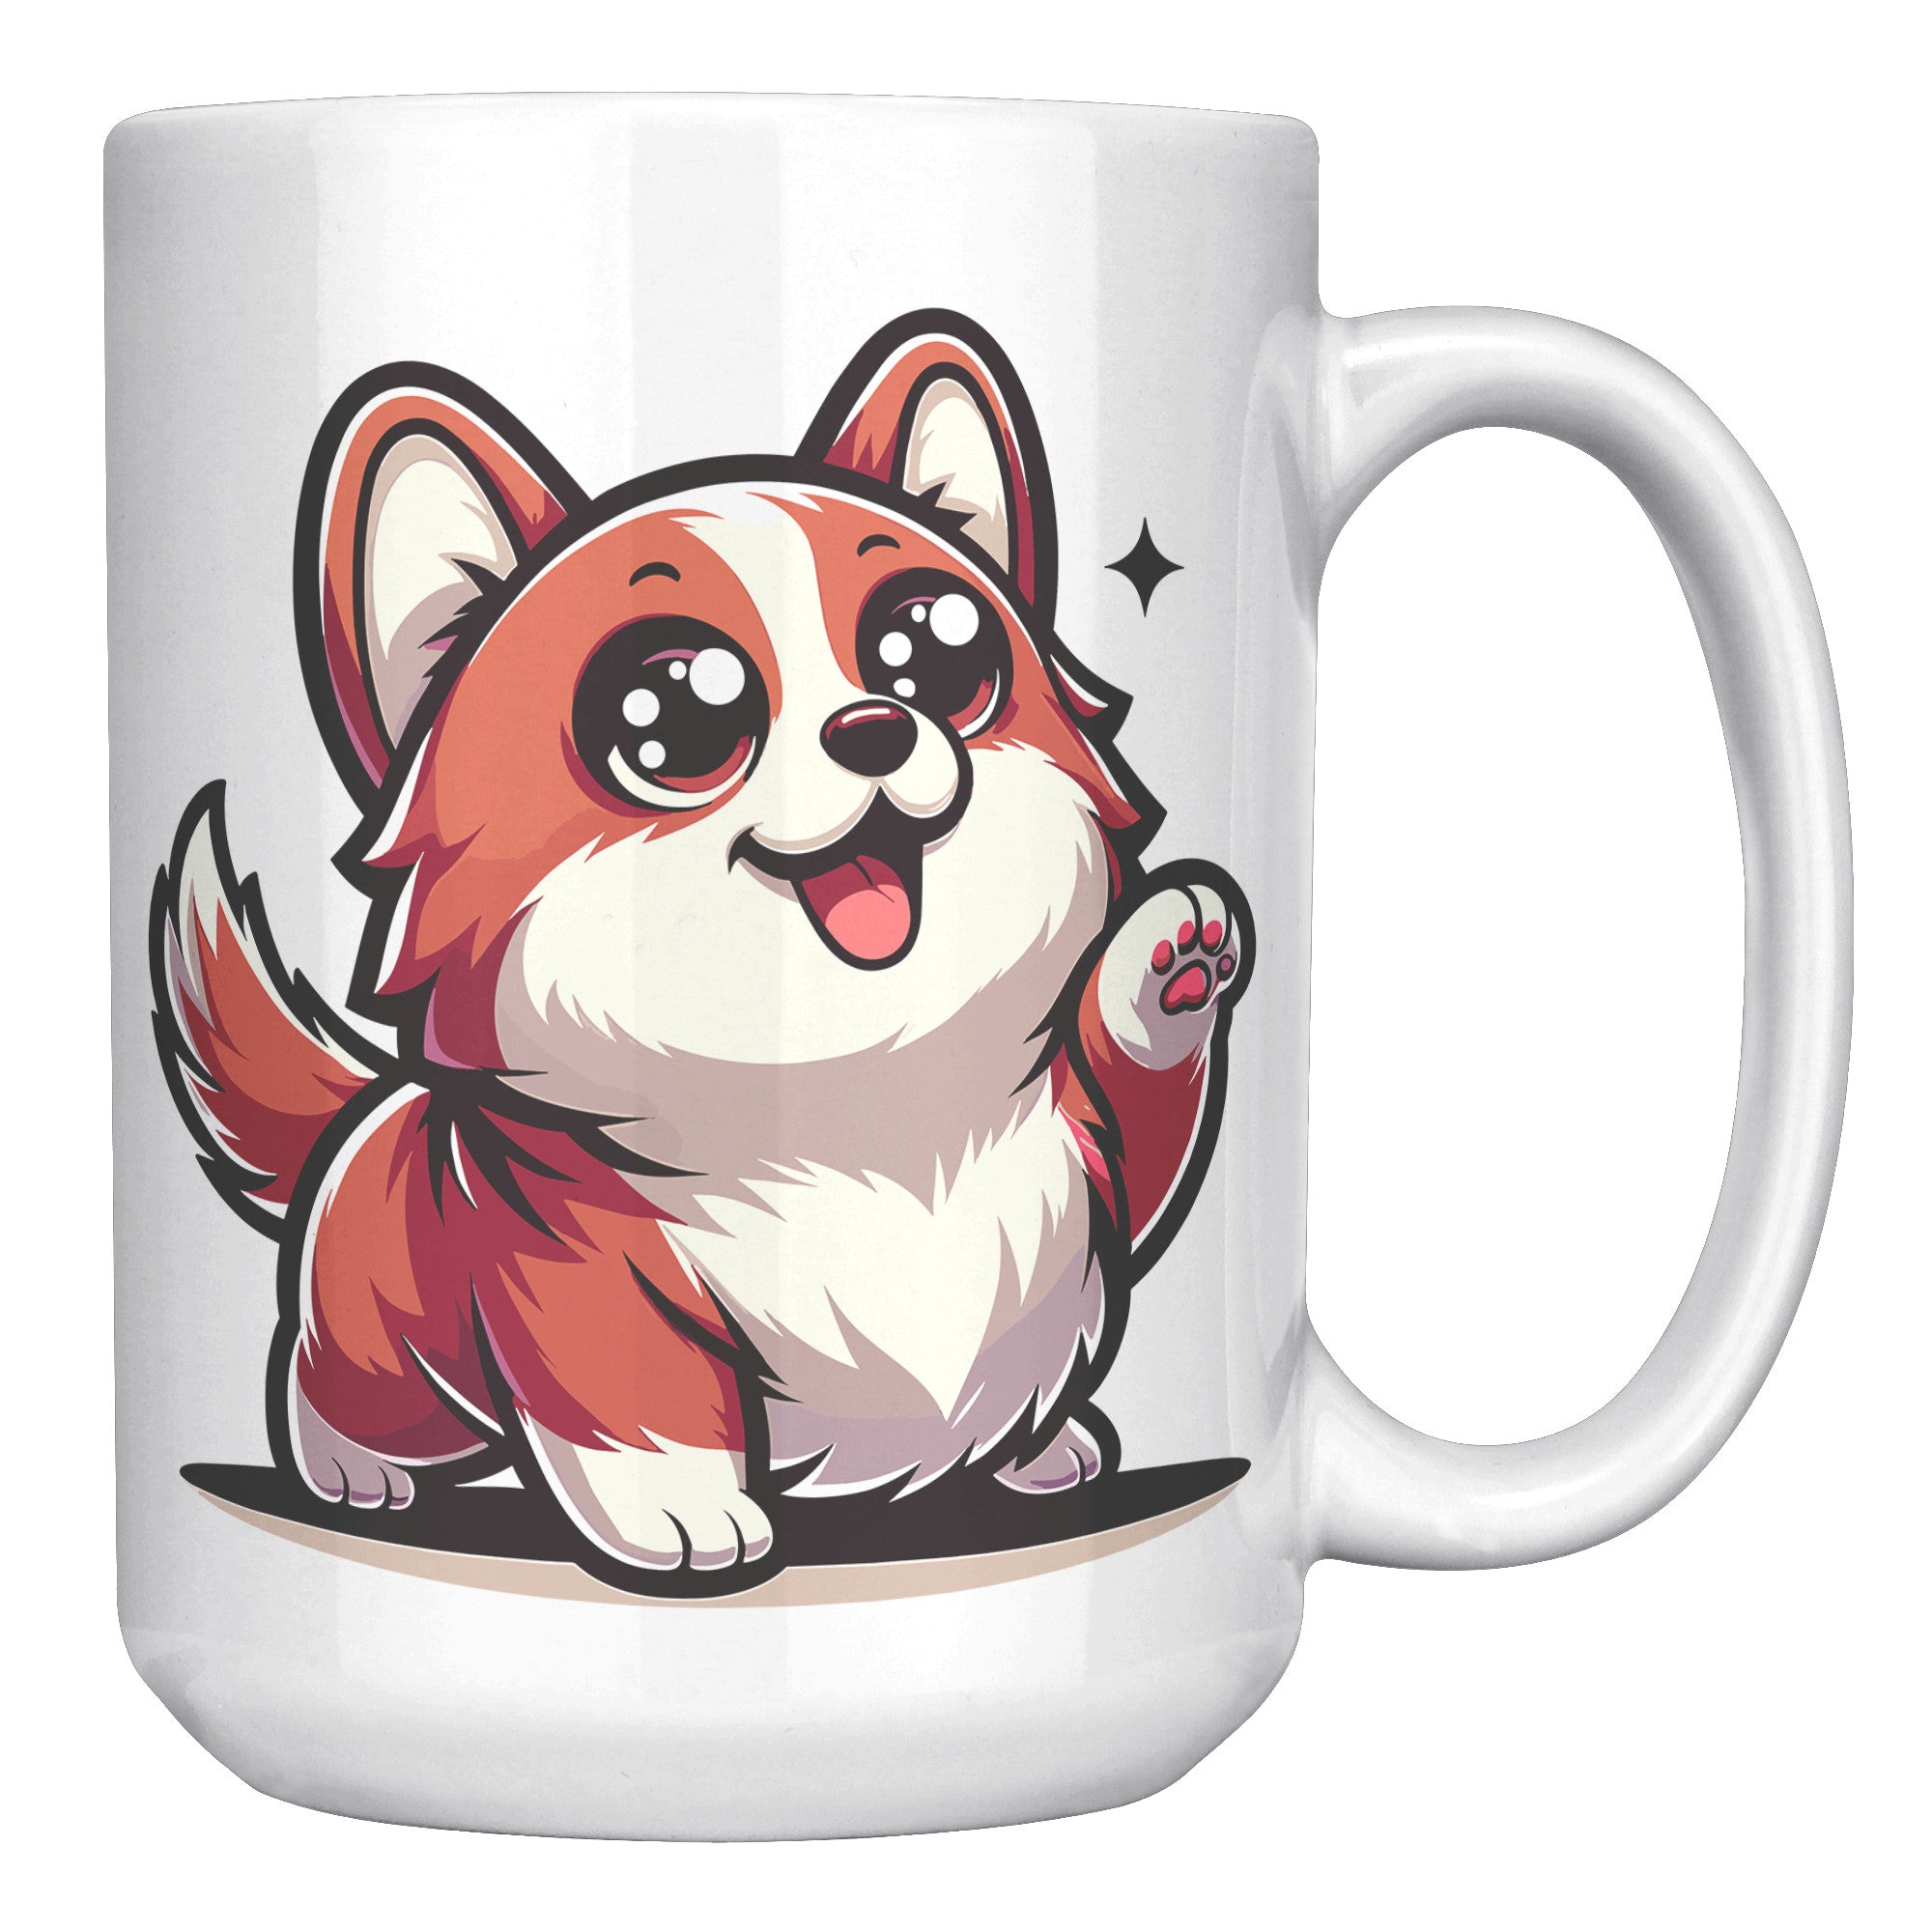 15oz Corgi Lover Cartoon Mug - Adorable Corgi Dog Mug - Perfect Gift for Corgi Owners - Cute Pembroke Welsh Corgi Mug" - C1